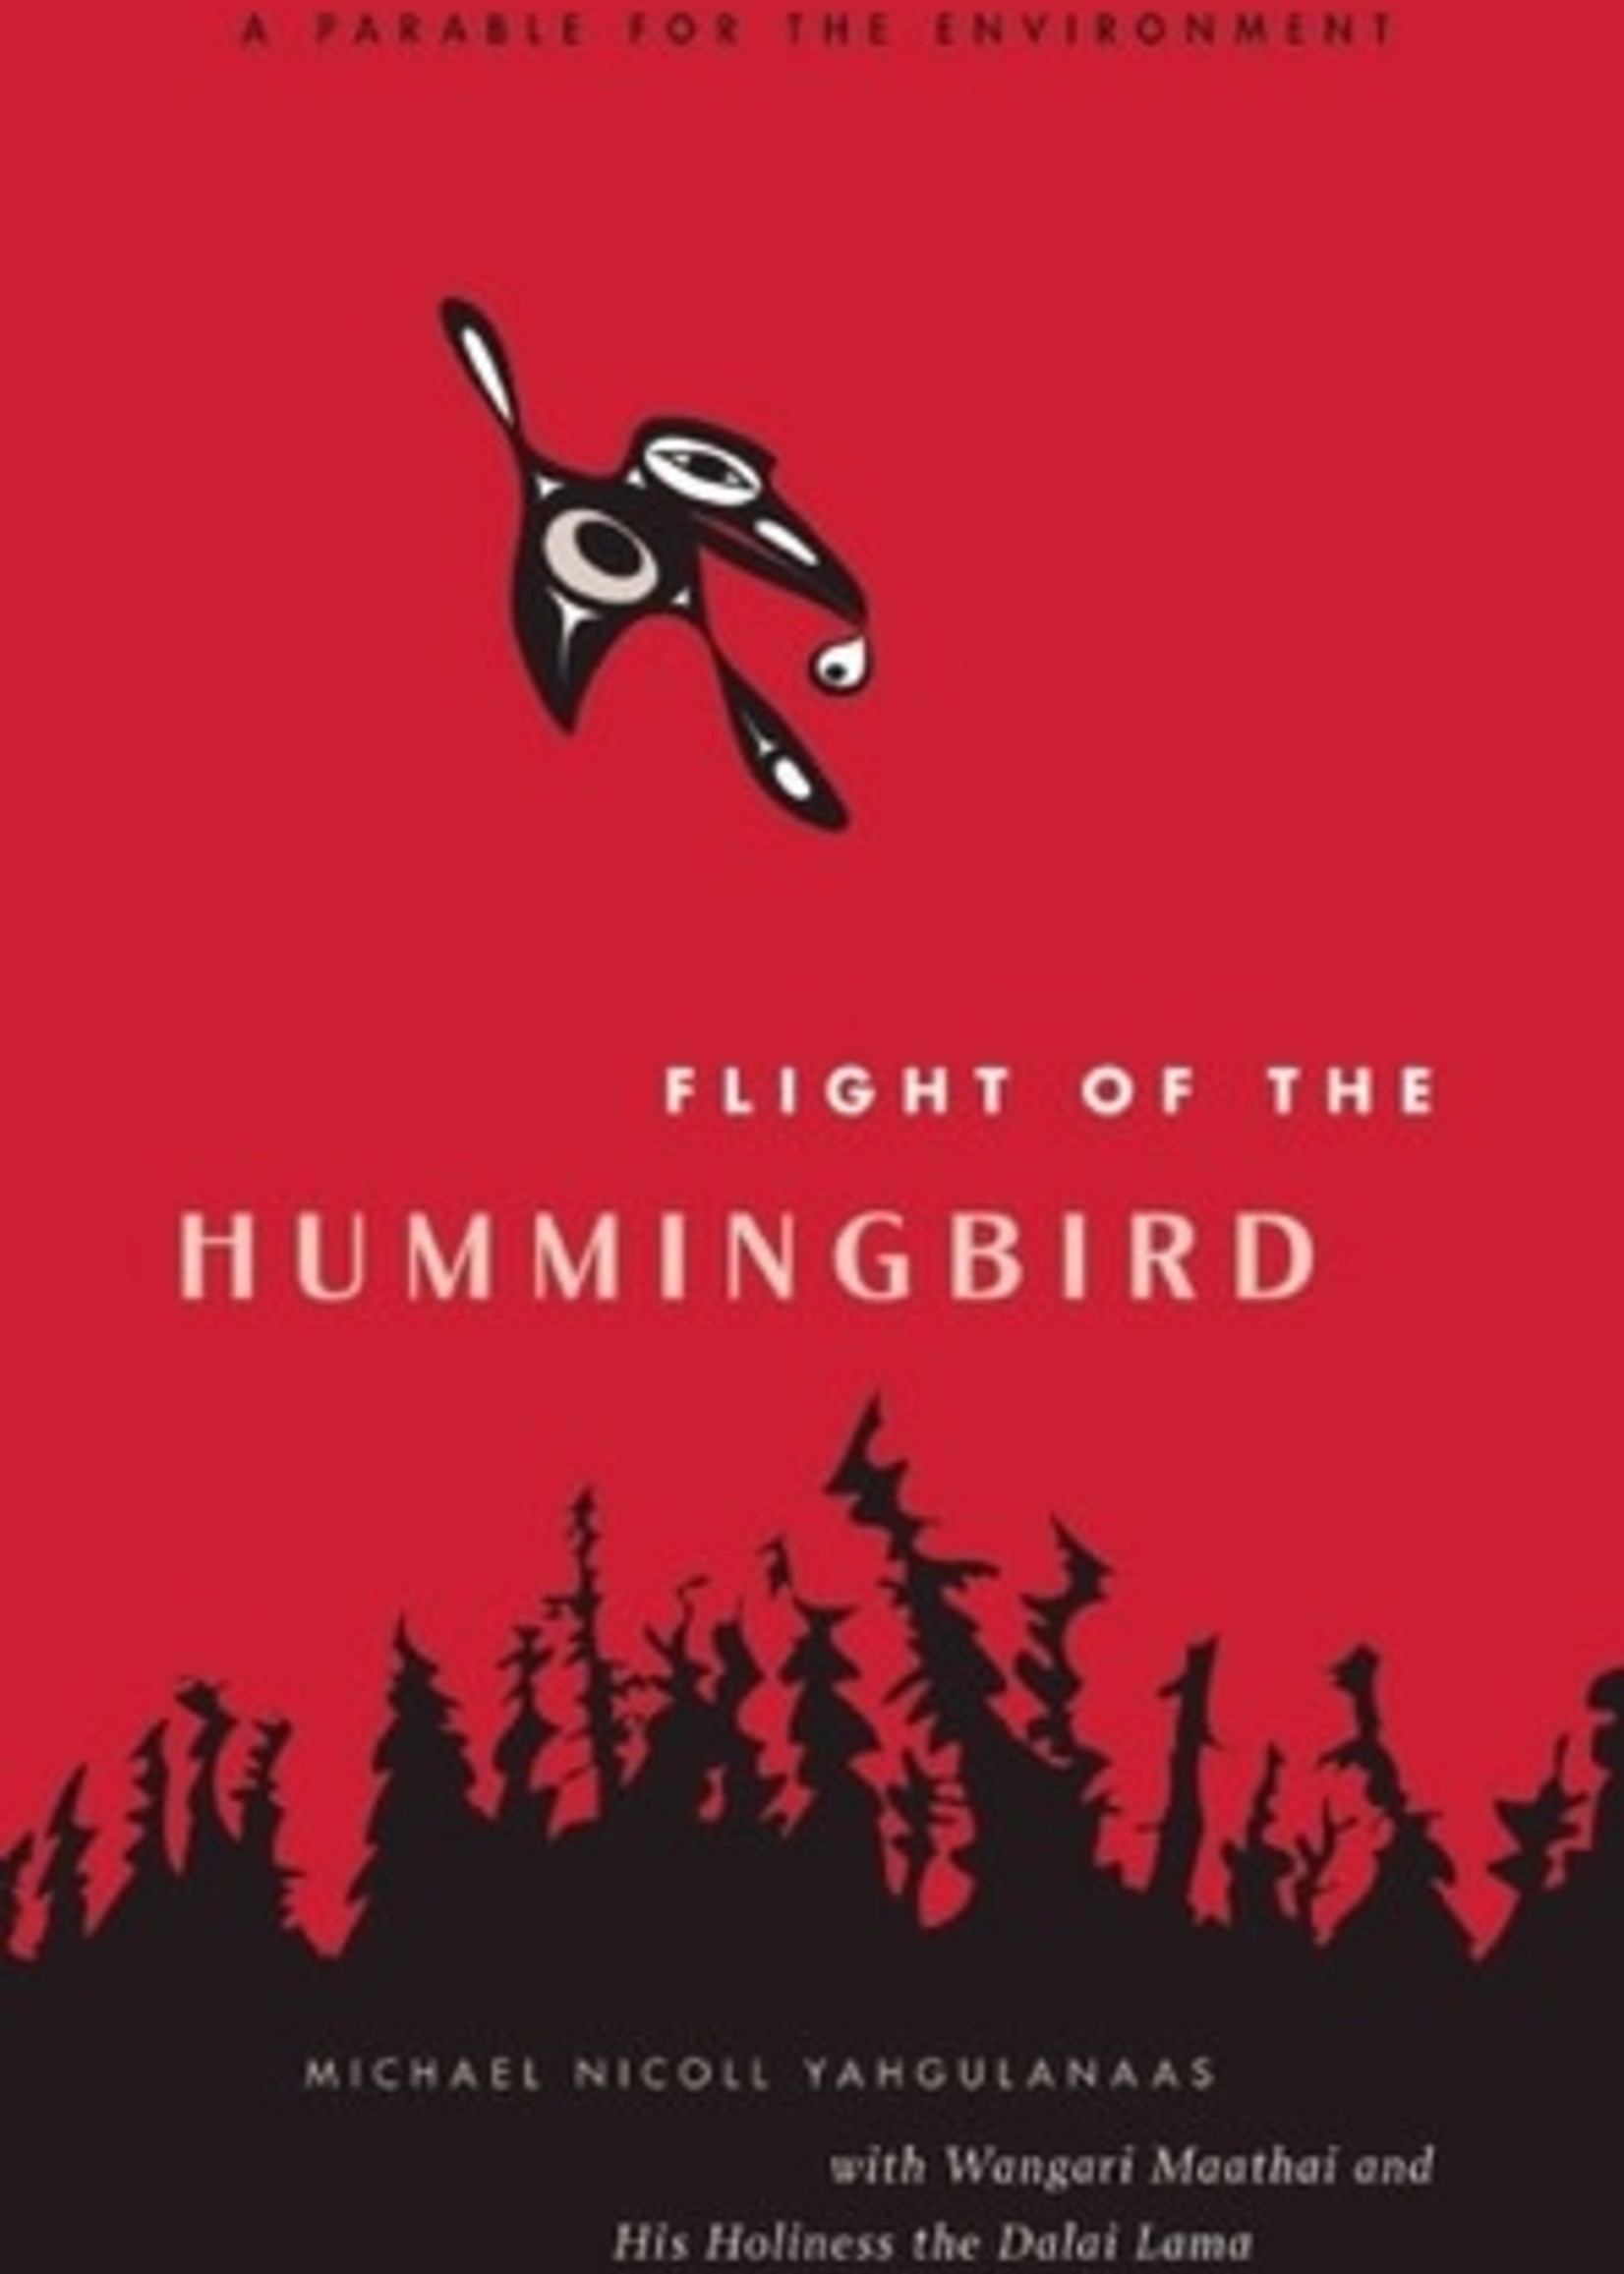 Flight of the Hummingbird: A Parable for the Environment by Michael Nicoll Yahgulanaas, Wangari Maathai